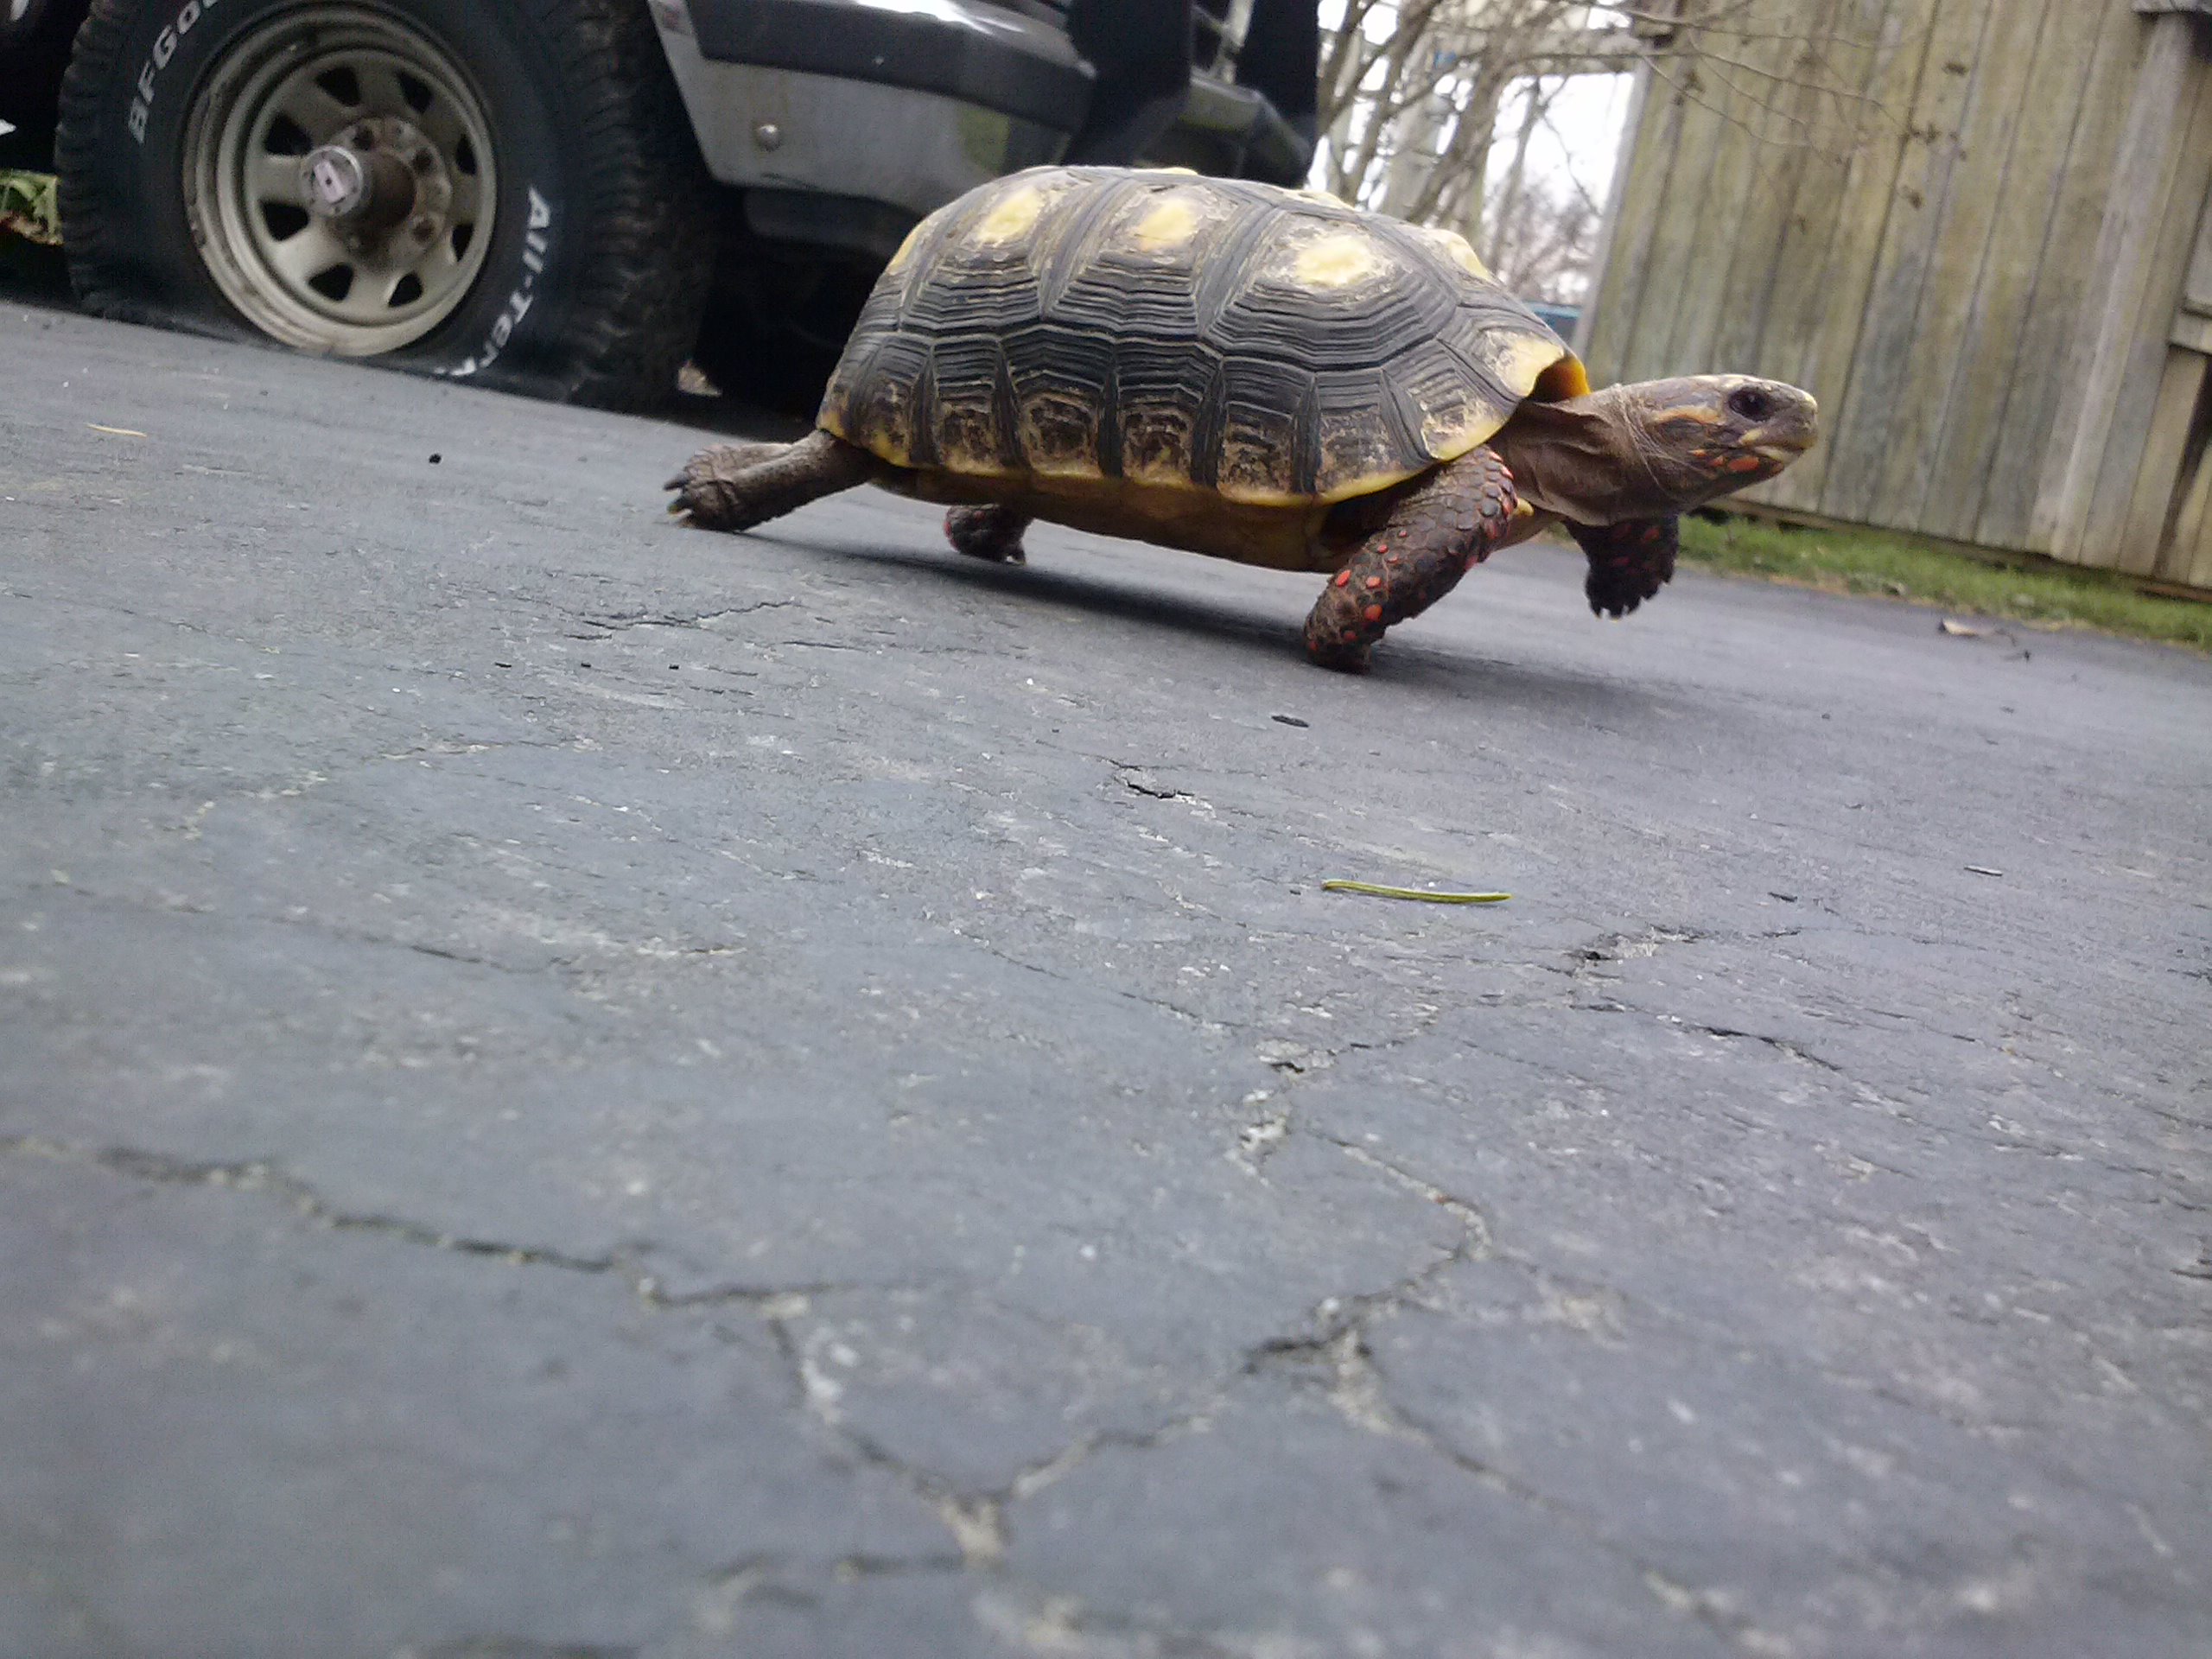 Paco found pavement